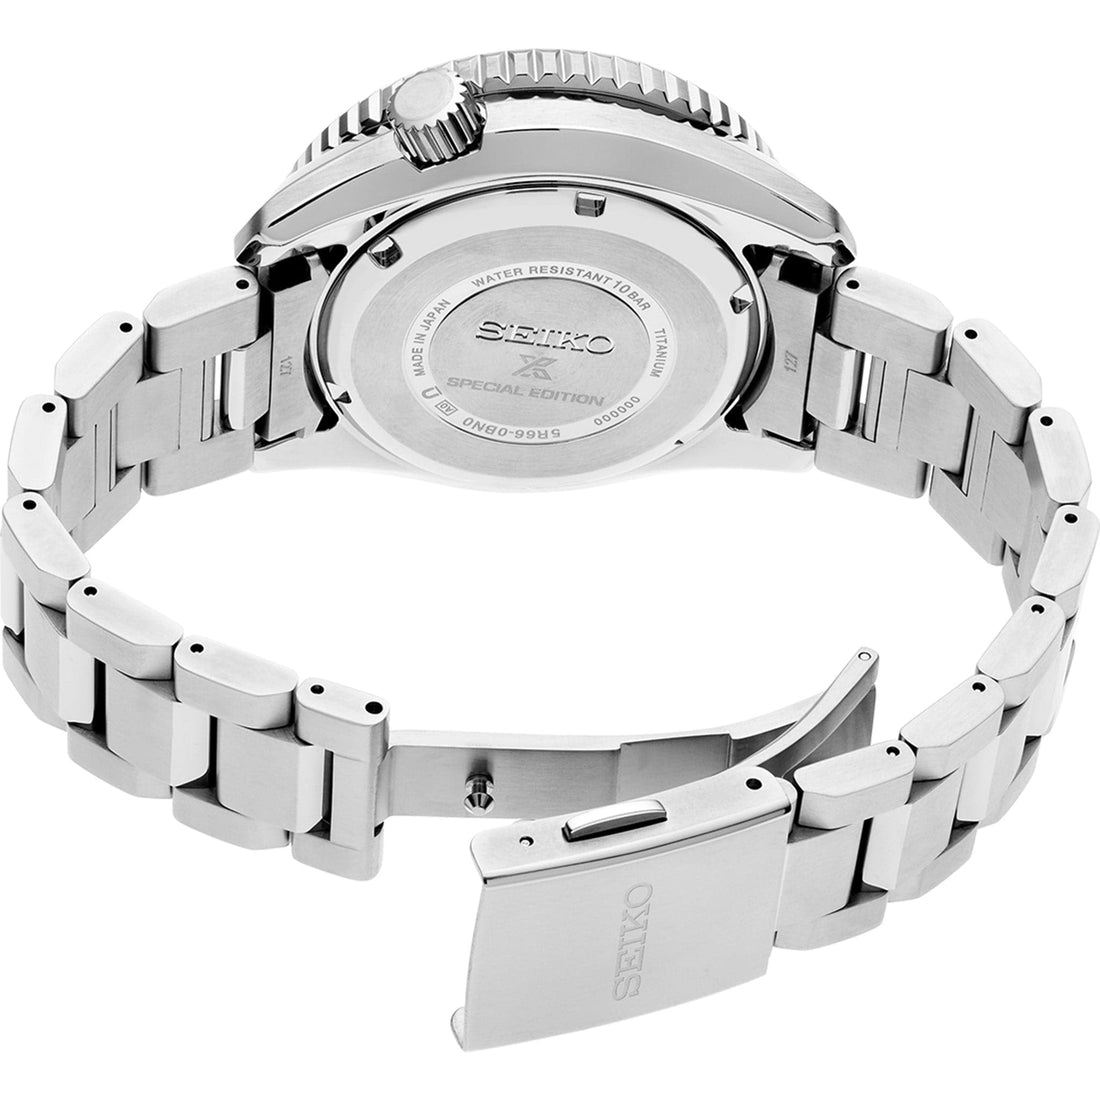 Seiko Prospex LX SNR051 Spring Drive GMT Automatic Watch Under